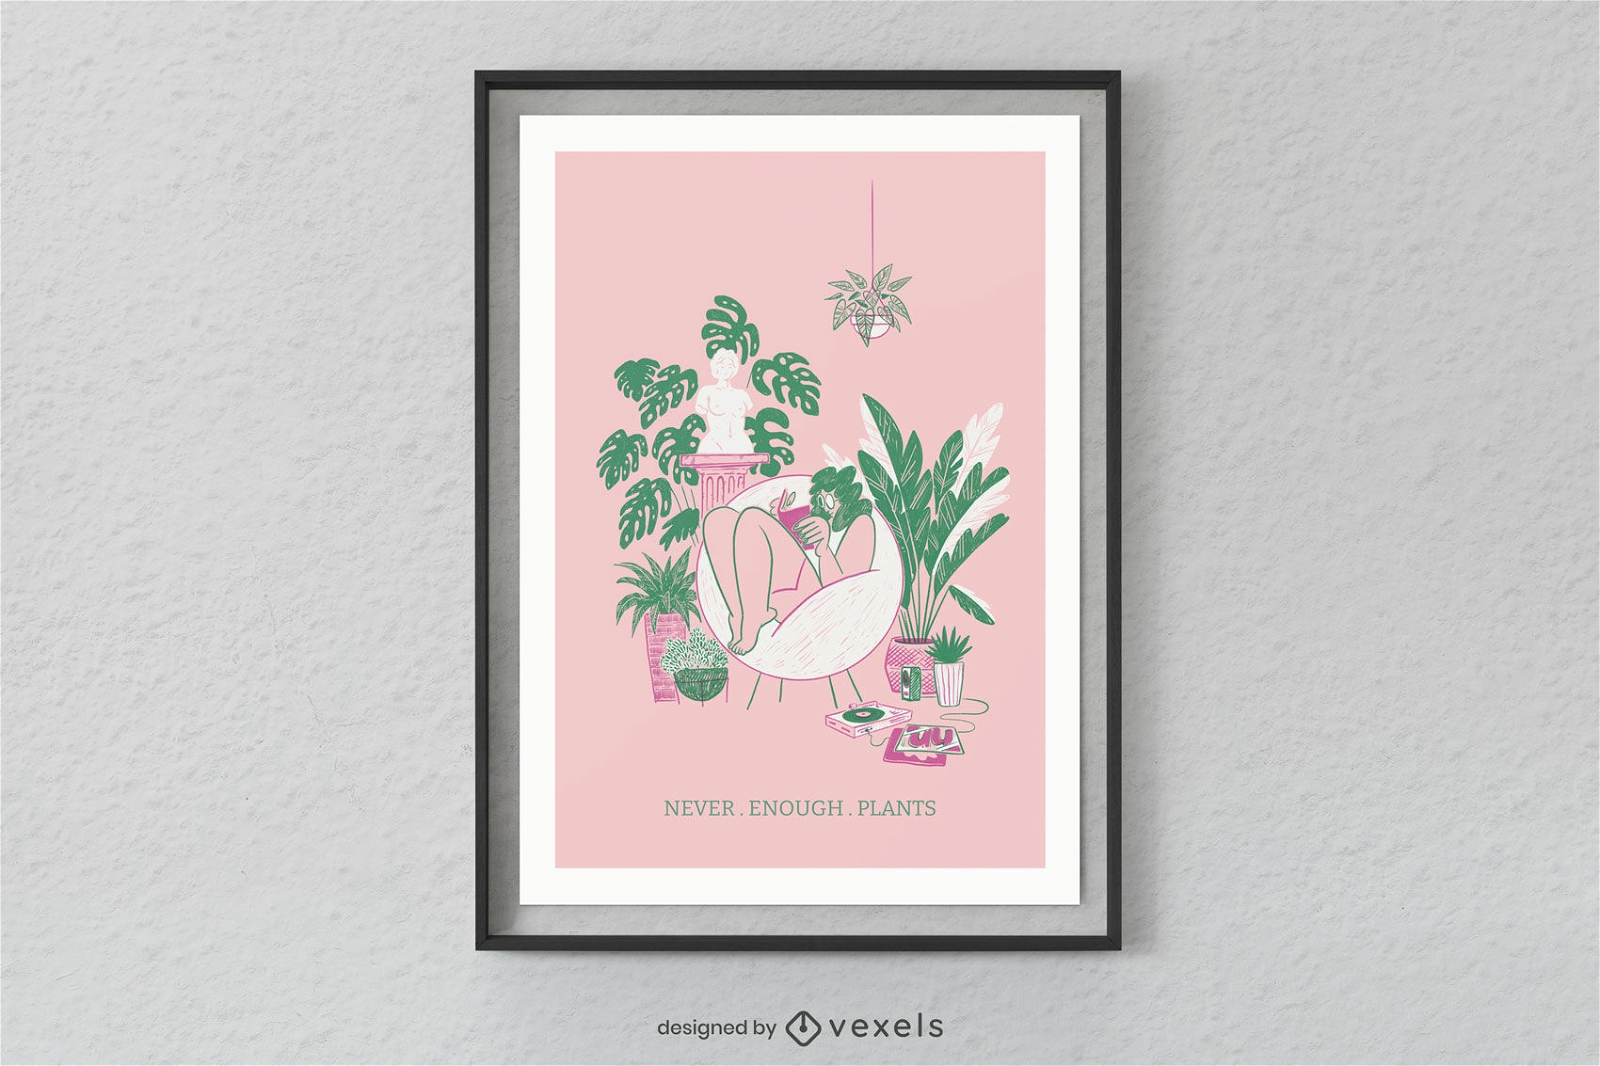 Never enough plants poster design